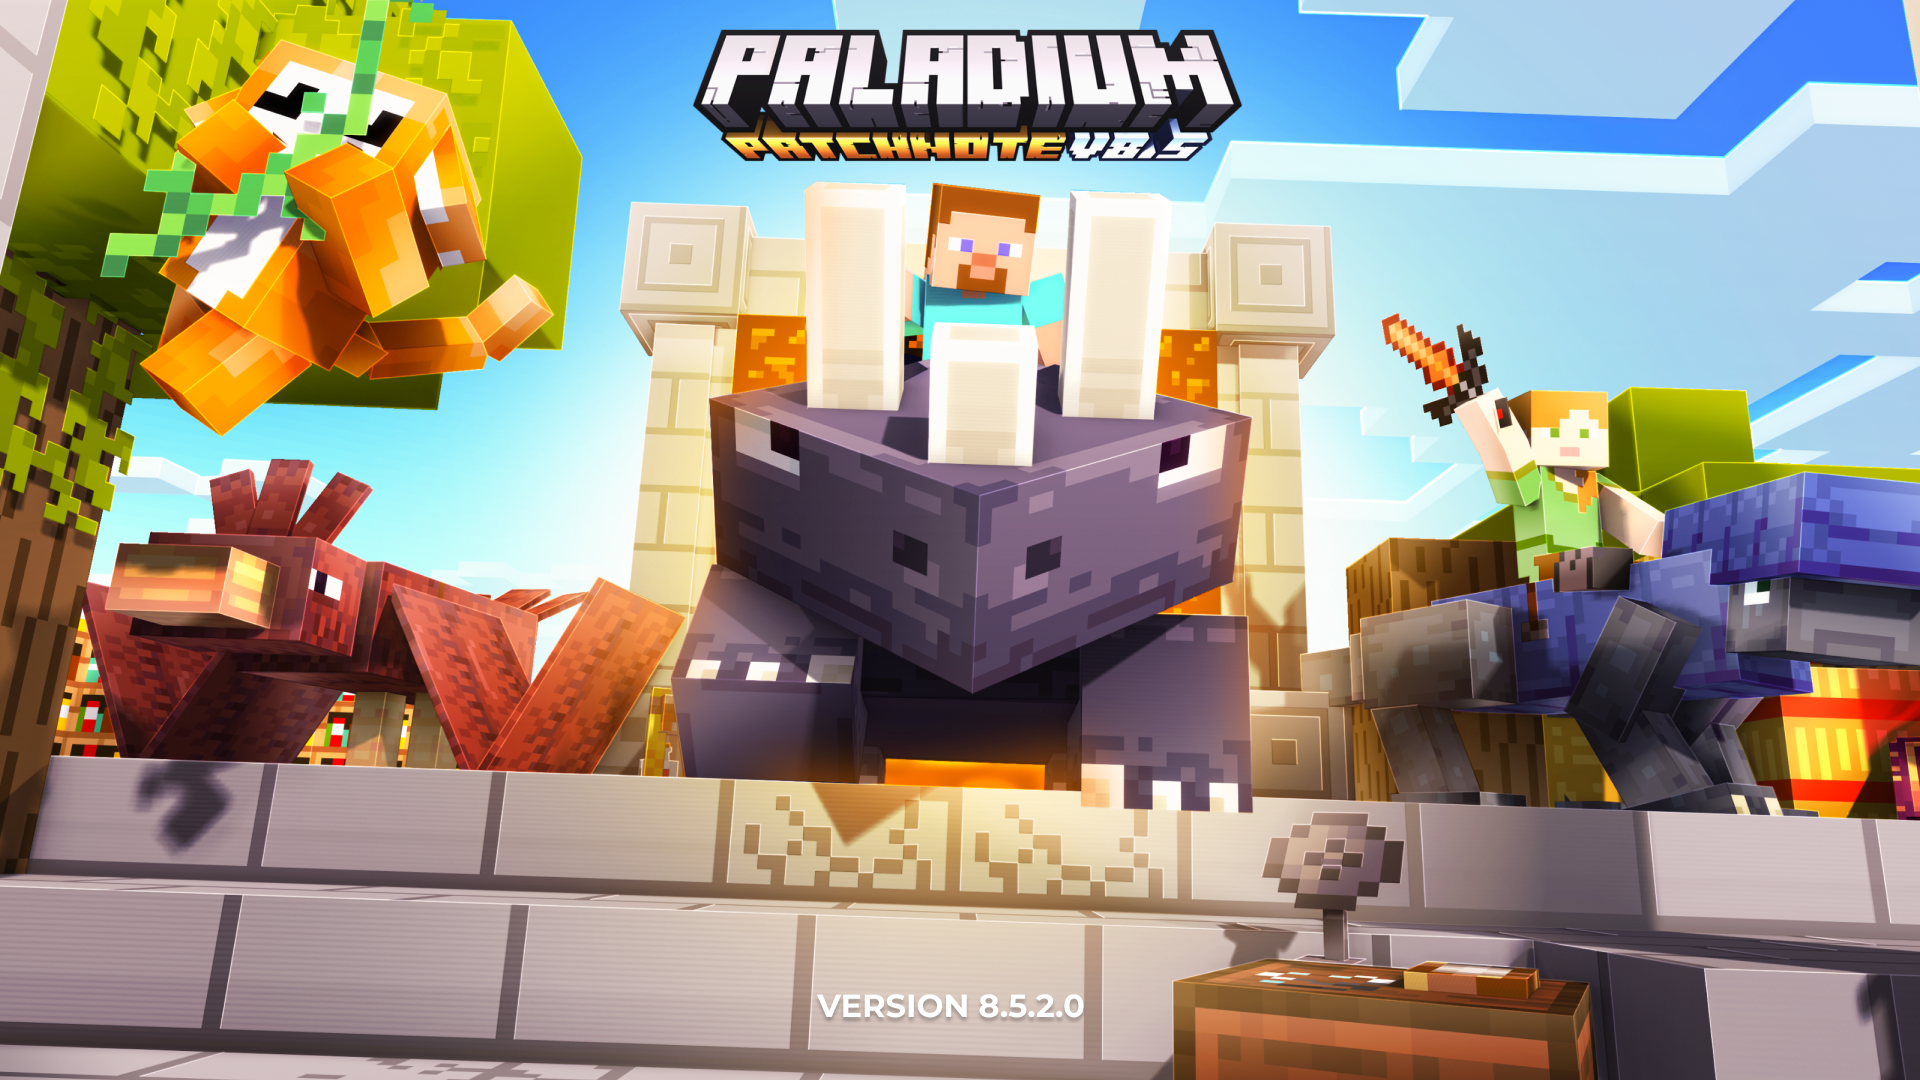 Paladium - PatchNote V8.5.2.0 | 09/02/2022